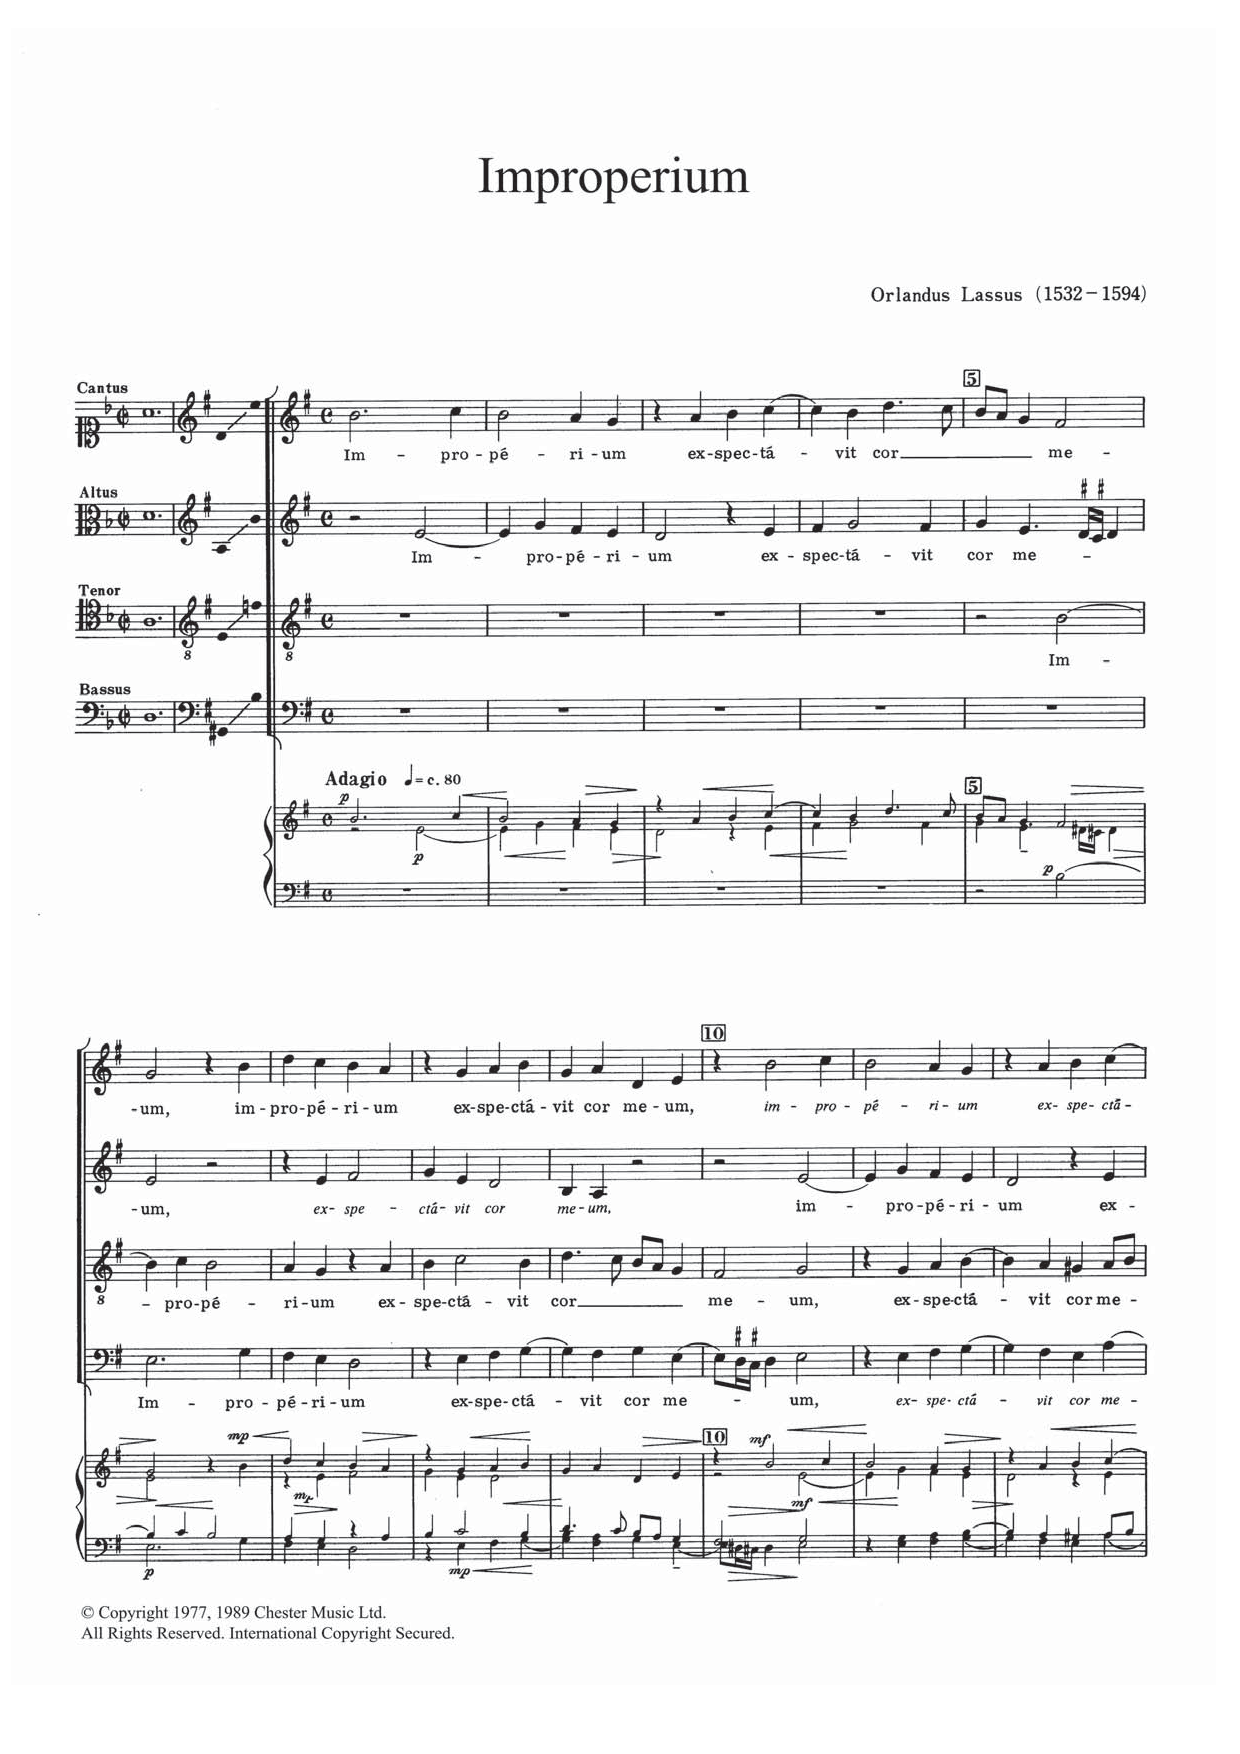 Orlandus Lassus Improperium sheet music notes and chords arranged for SATB Choir